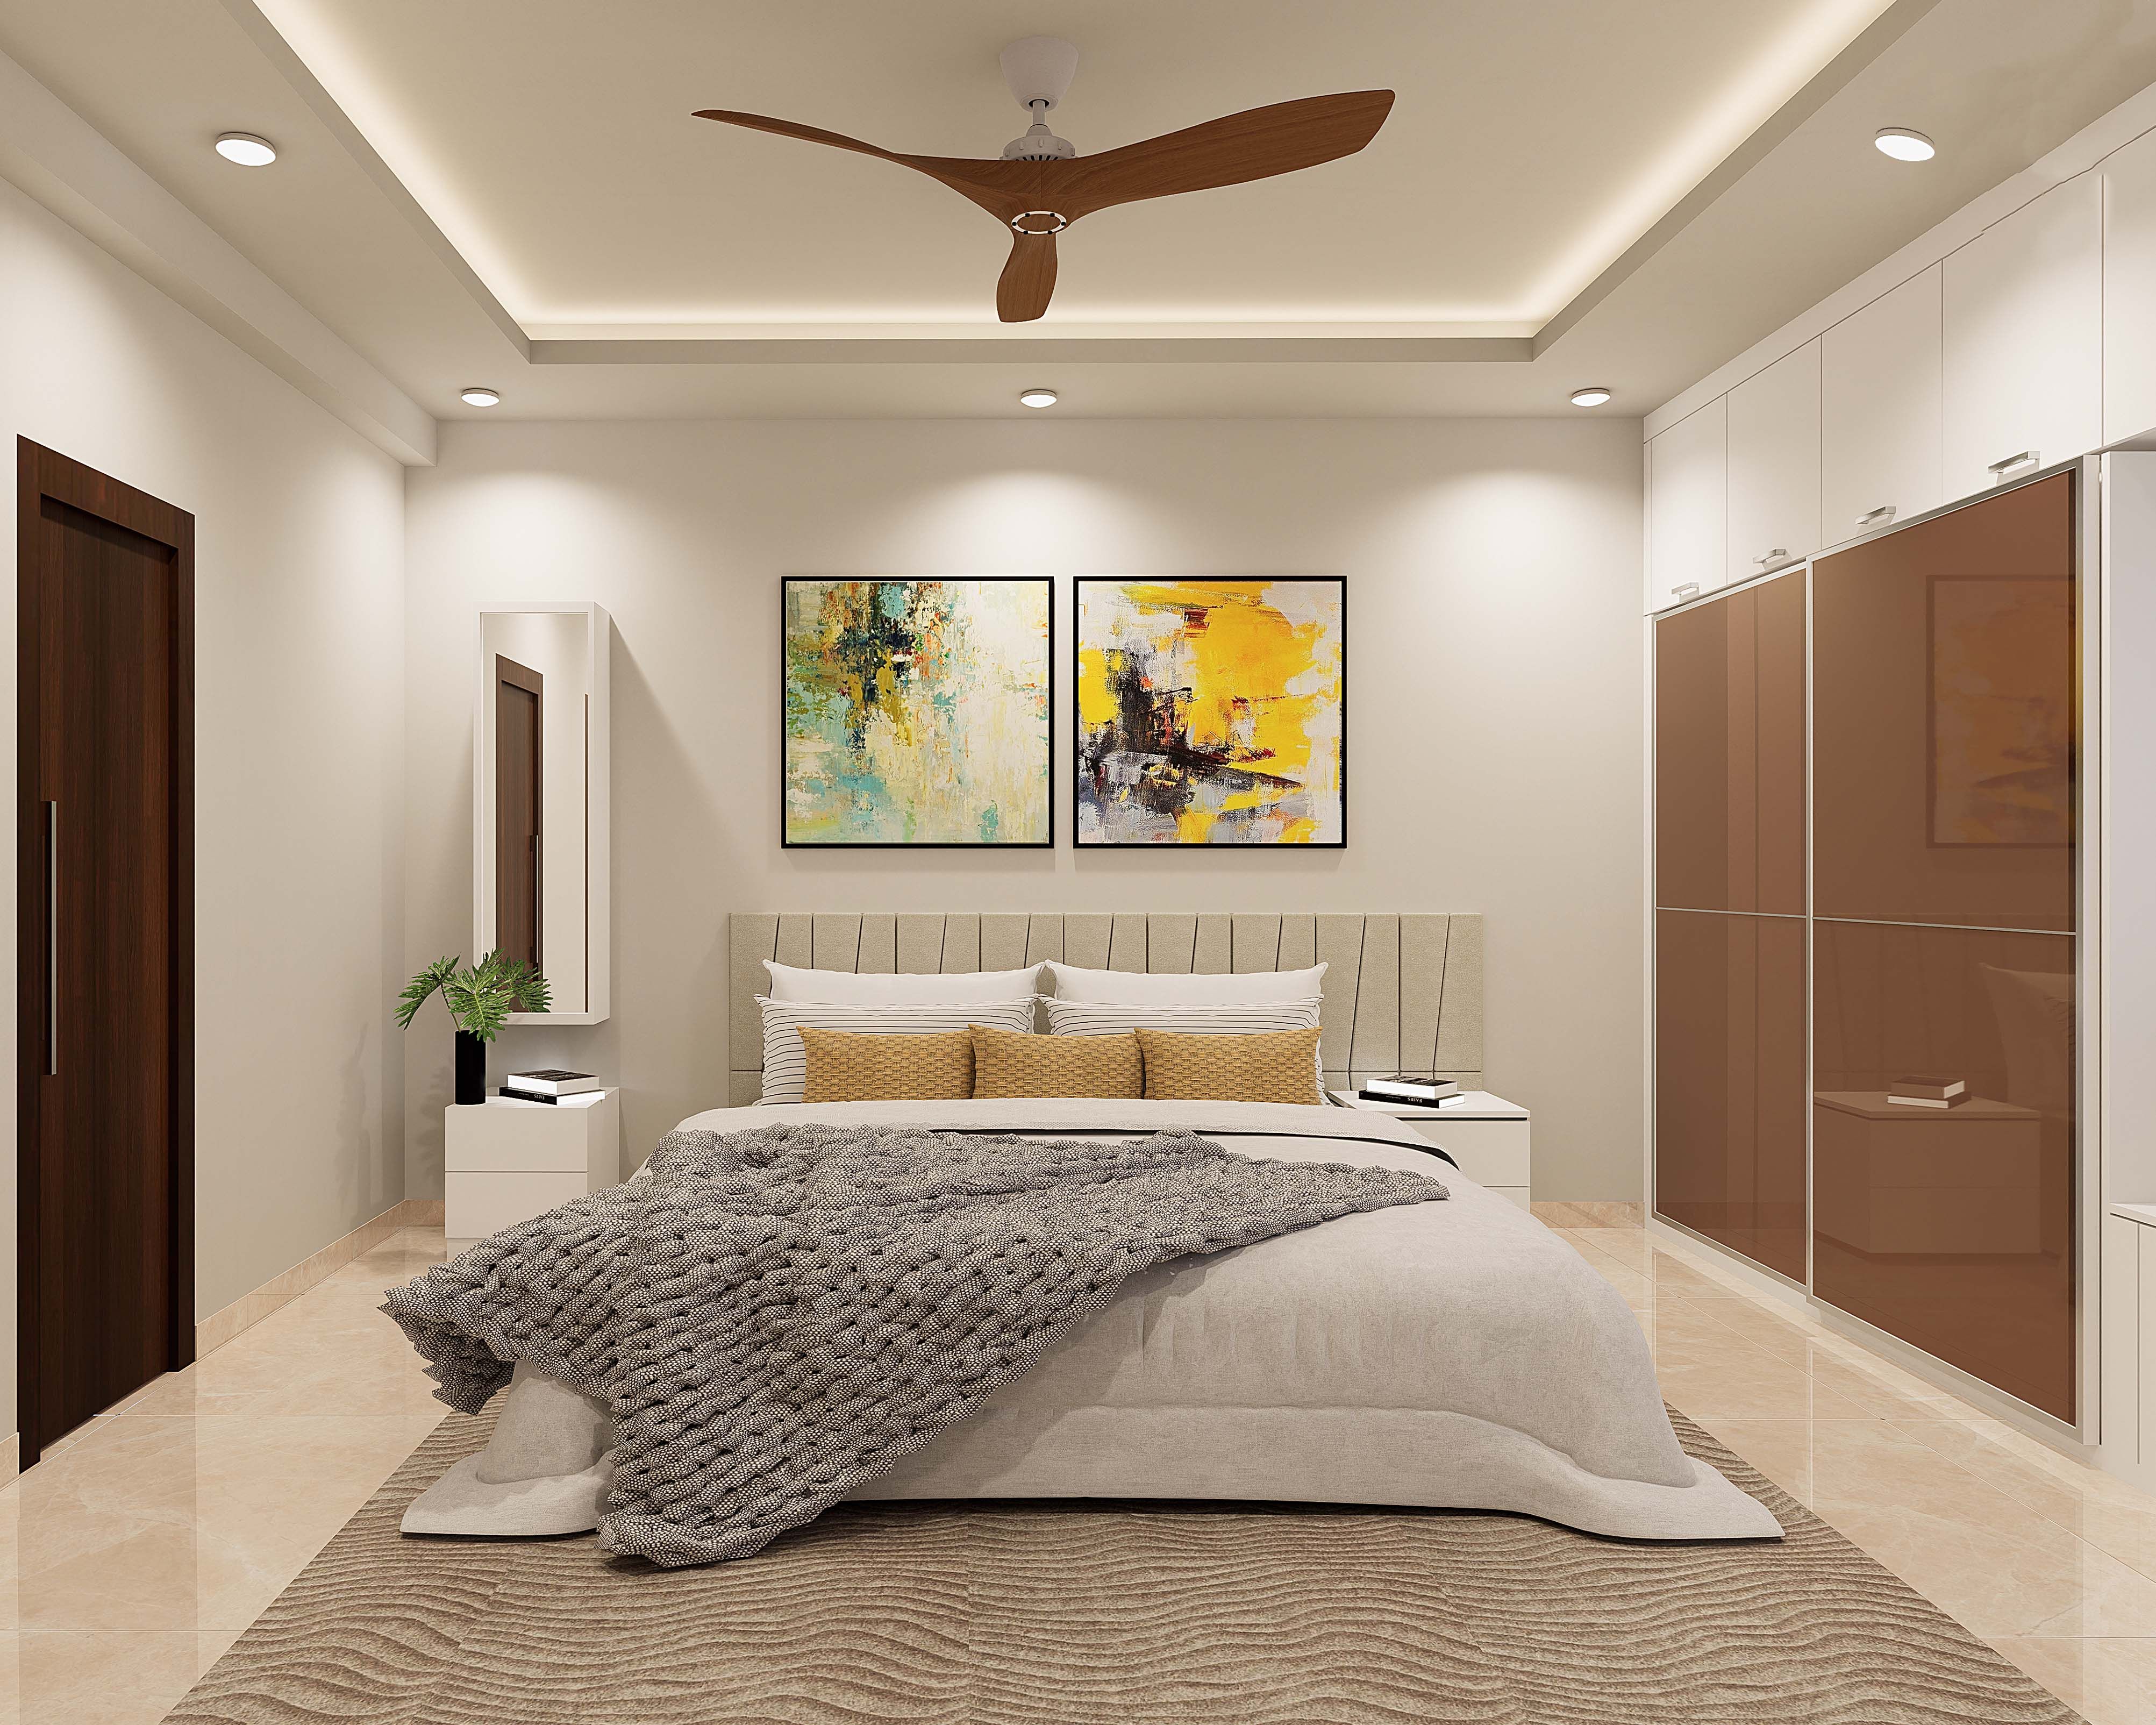 Bedroom Interior Designs & Decorating Ideas, Images, Inspirations |  KreateCube